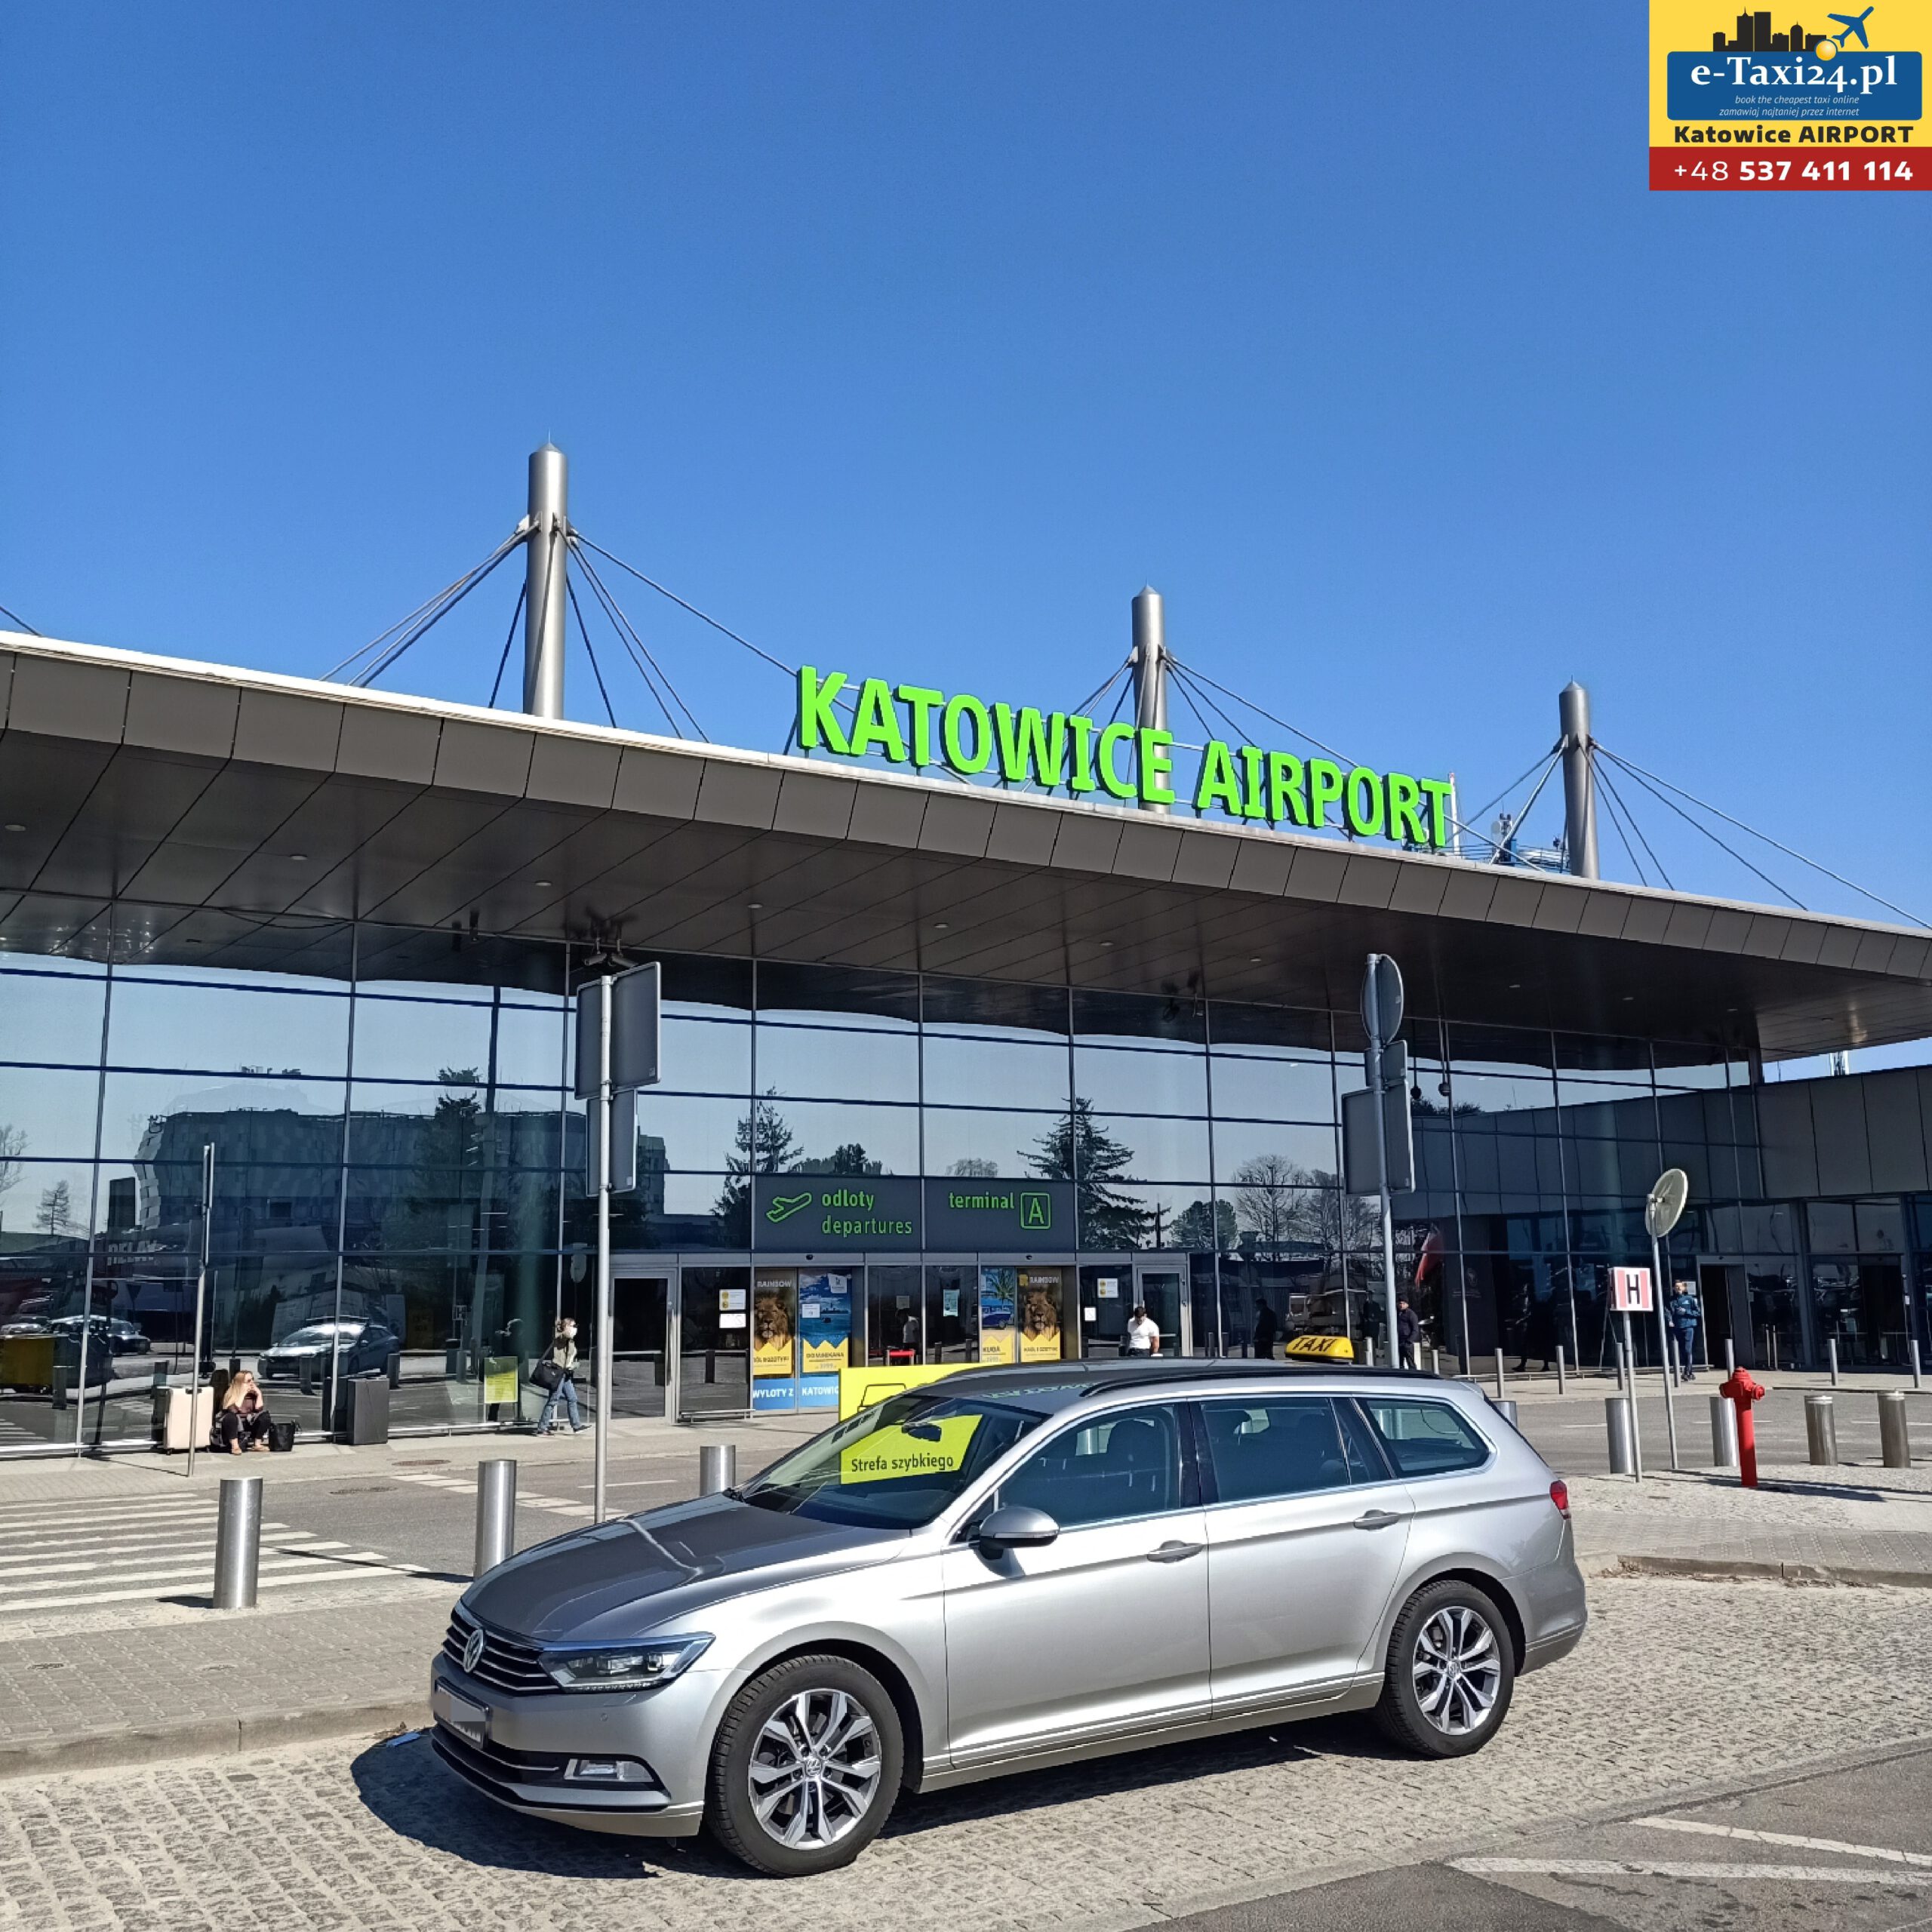 Taxi Airport Katowice - DE 3